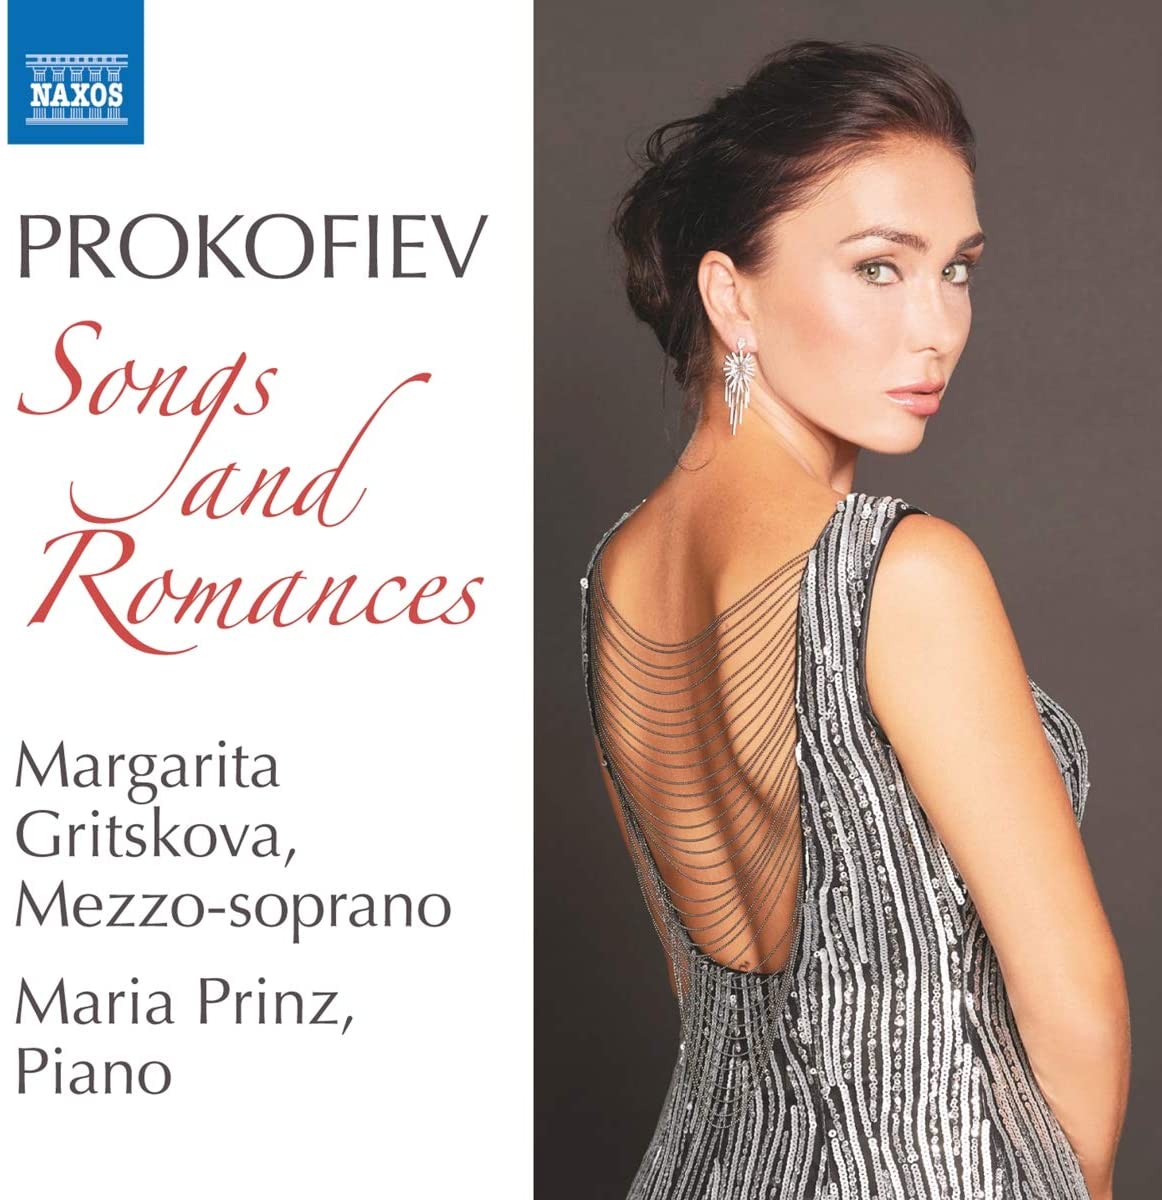 8 574030. PROKOFIEV Songs and Romances (Margarita Gritskova)